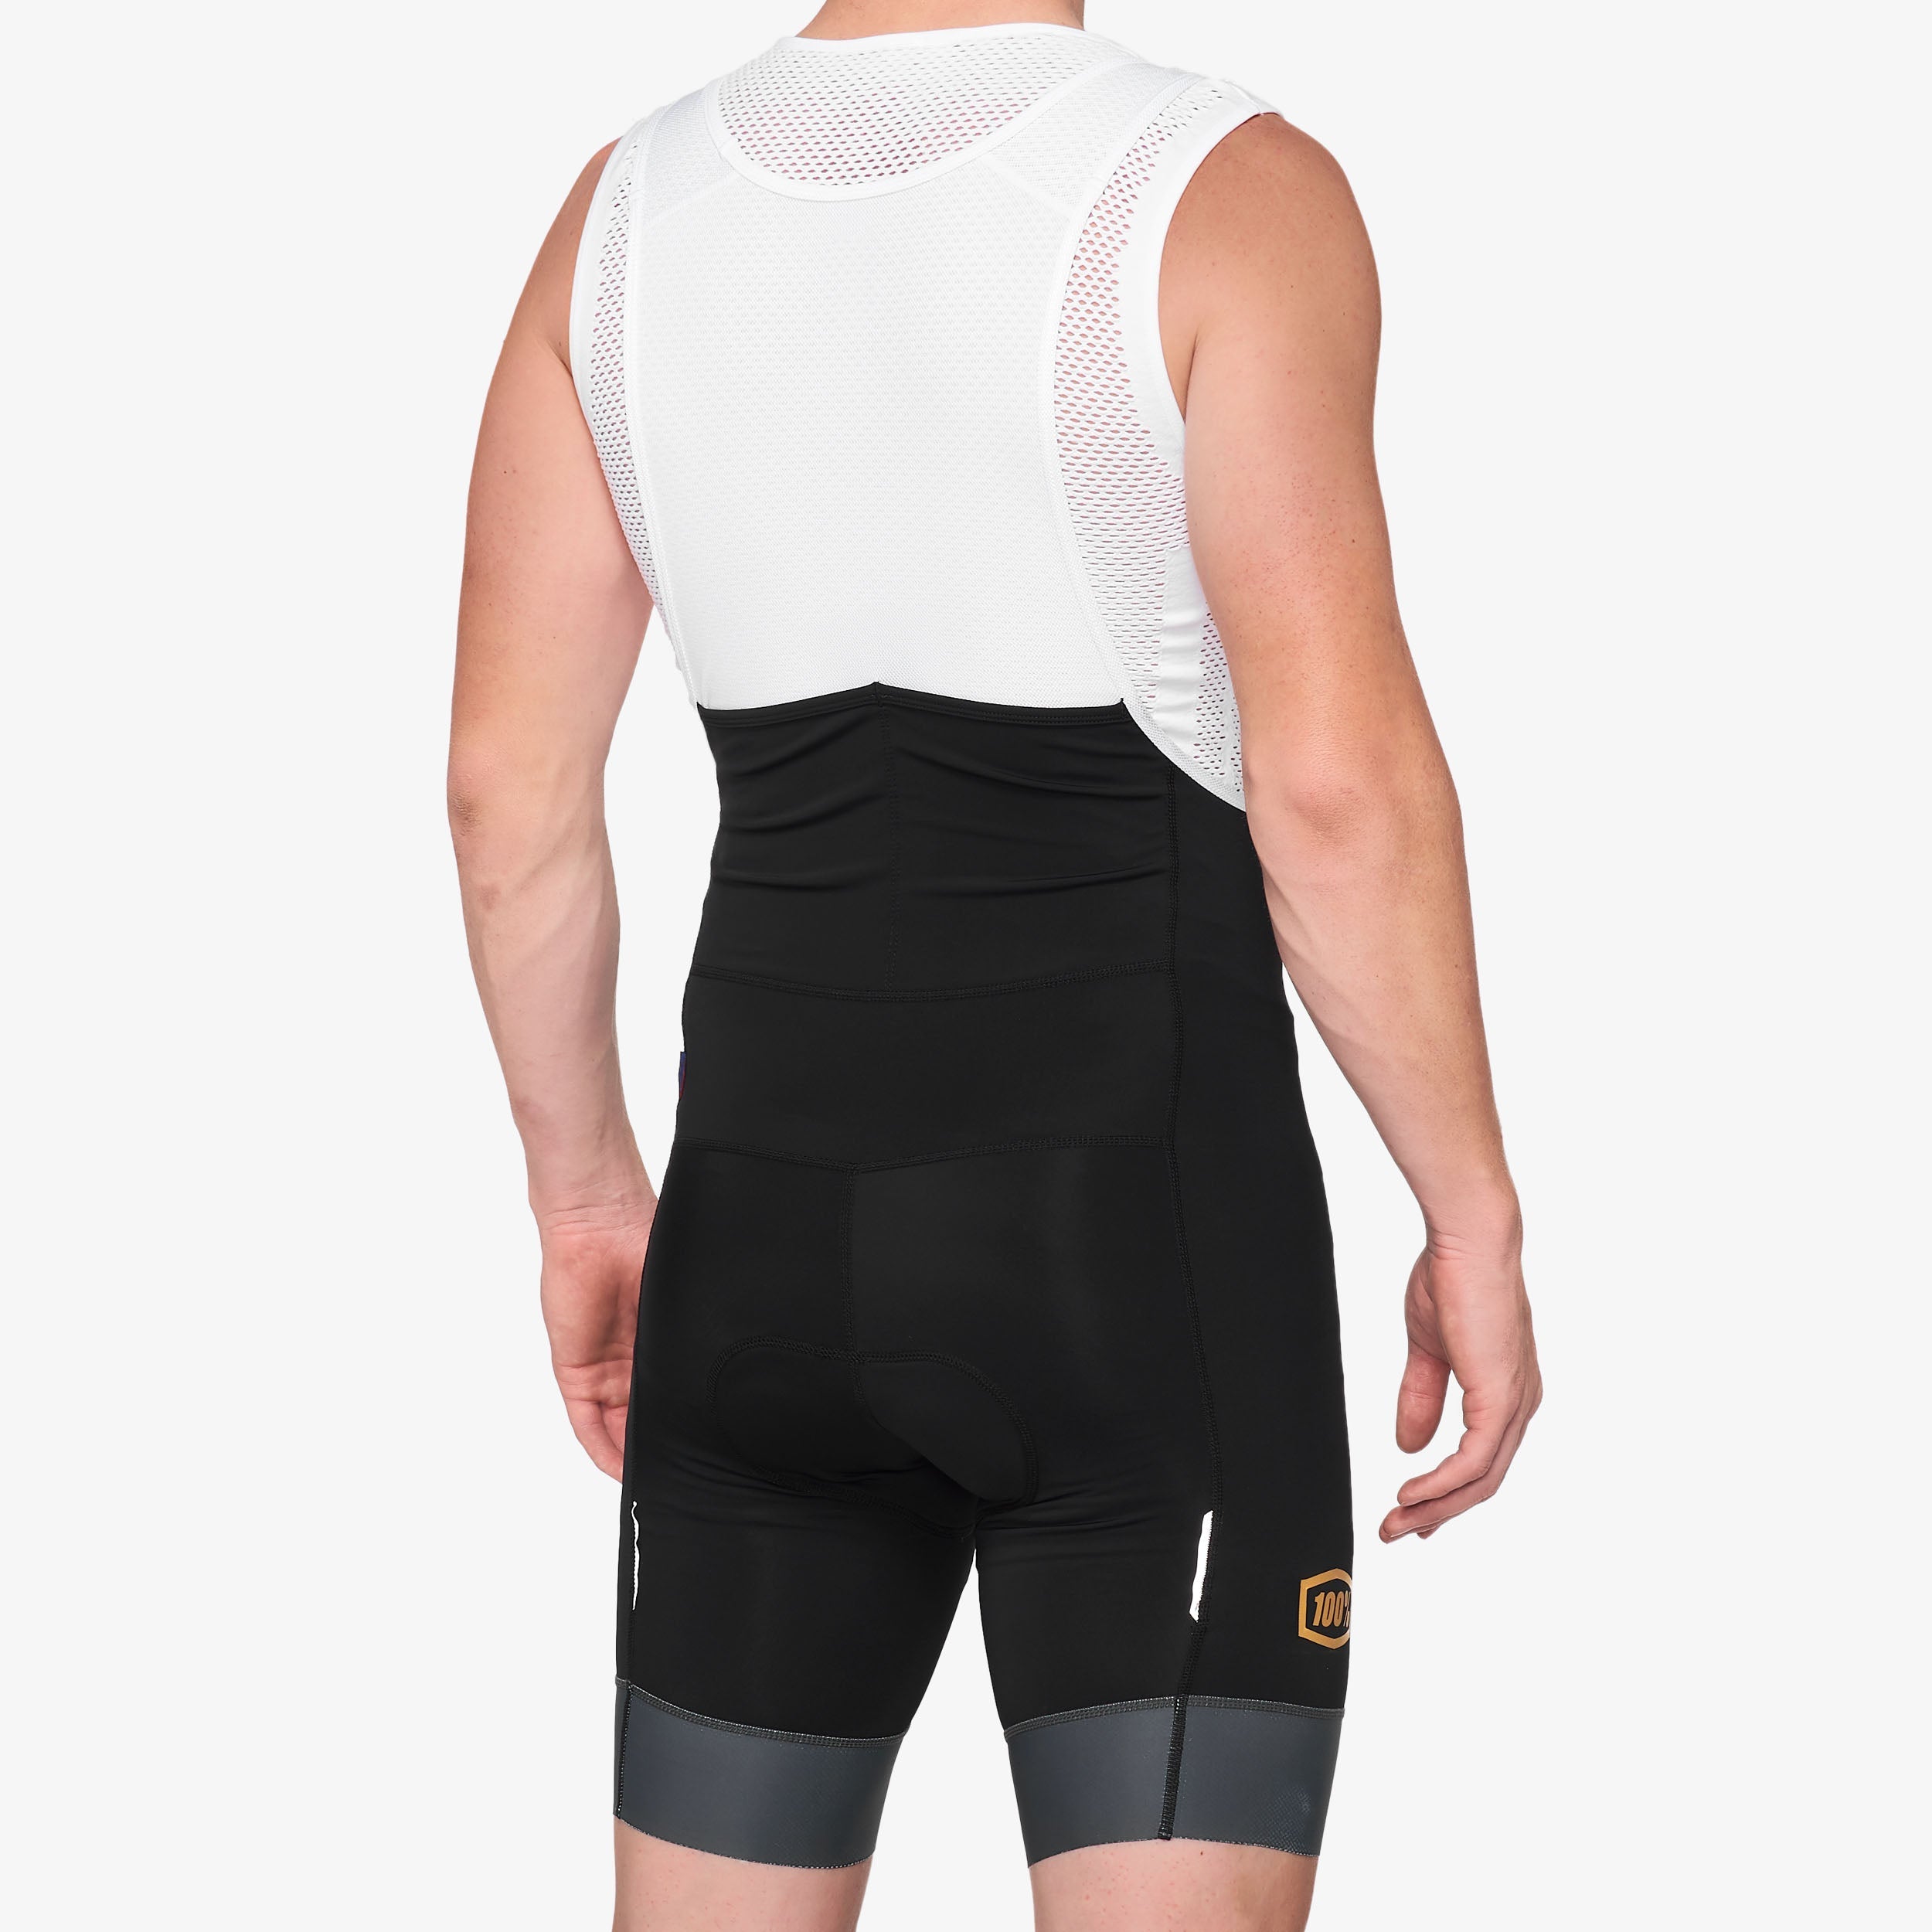 EXCEEDA Black/Charcoal Bib Shorts - Secondary